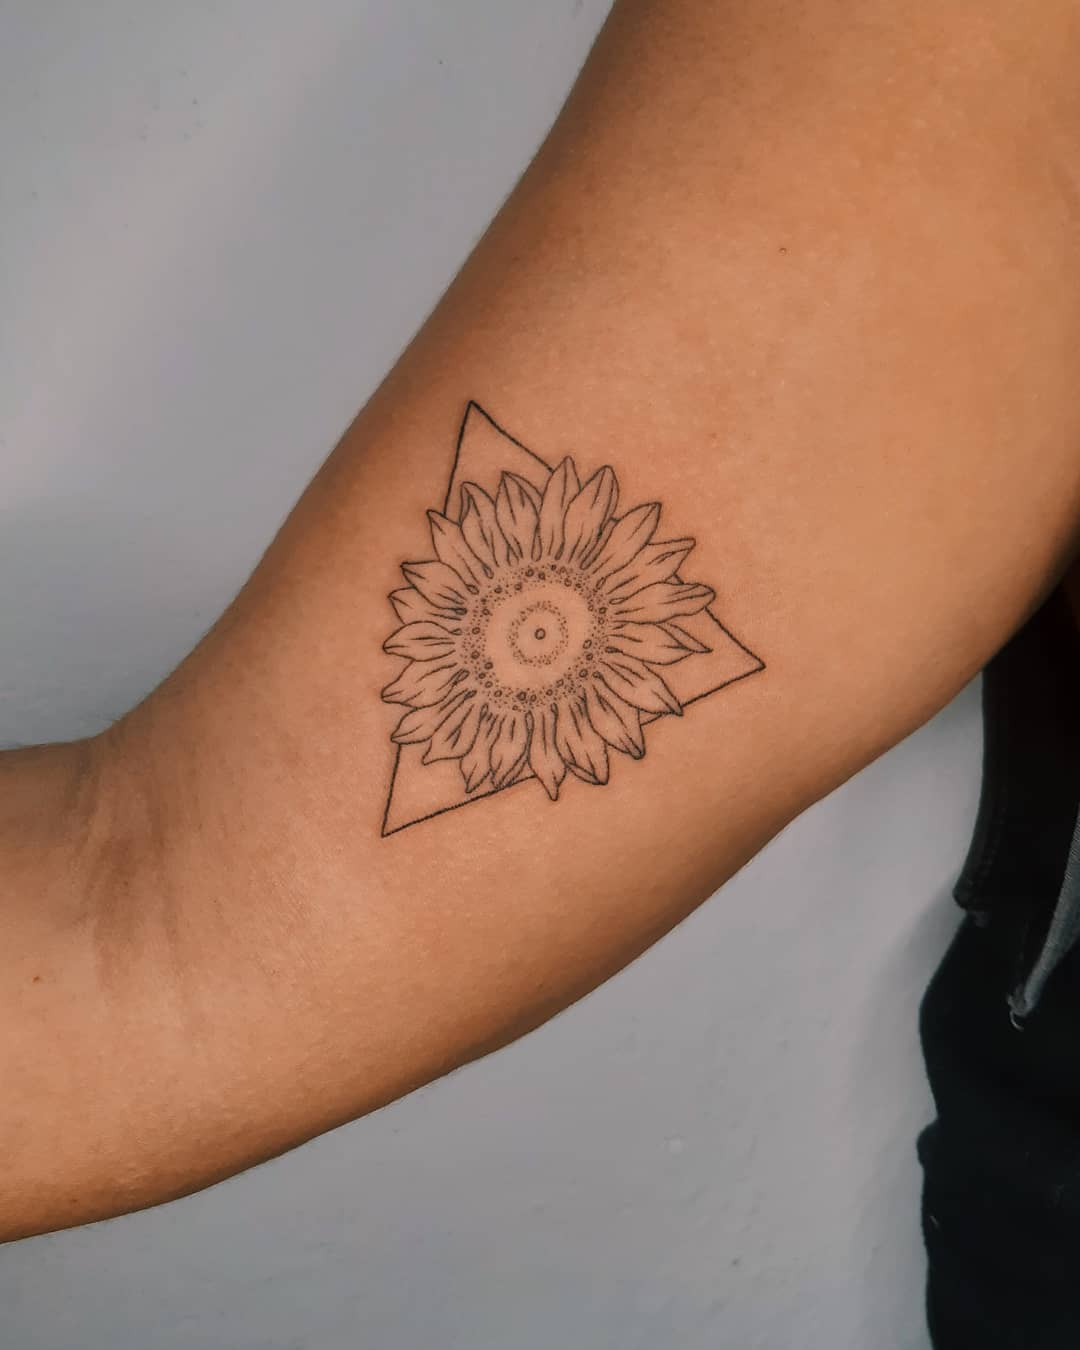 Desert Island tattoo on Stomach - Best Tattoo Ideas Gallery